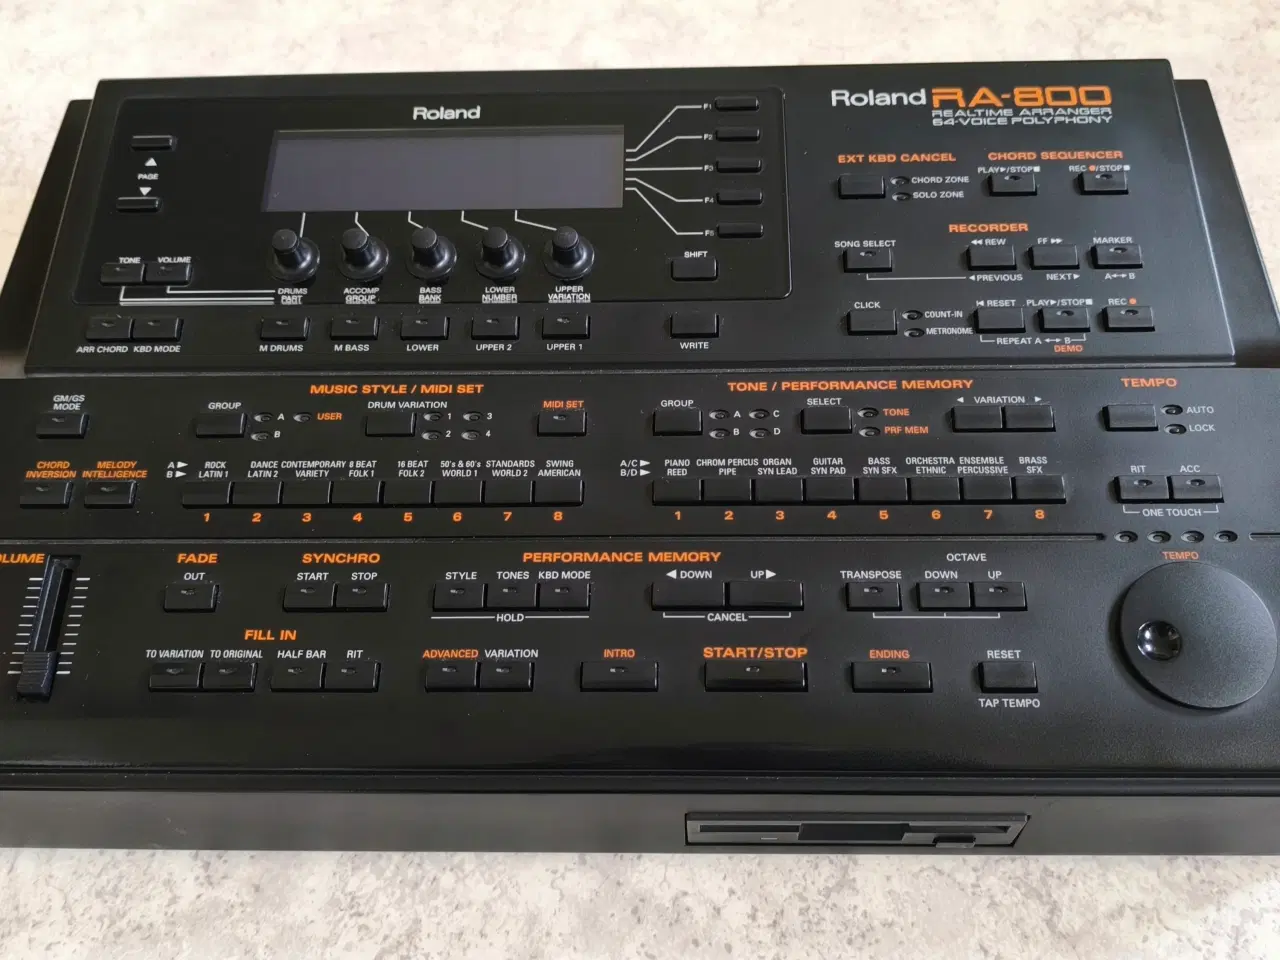 Billede 1 - Roland RA-800 lydmodul